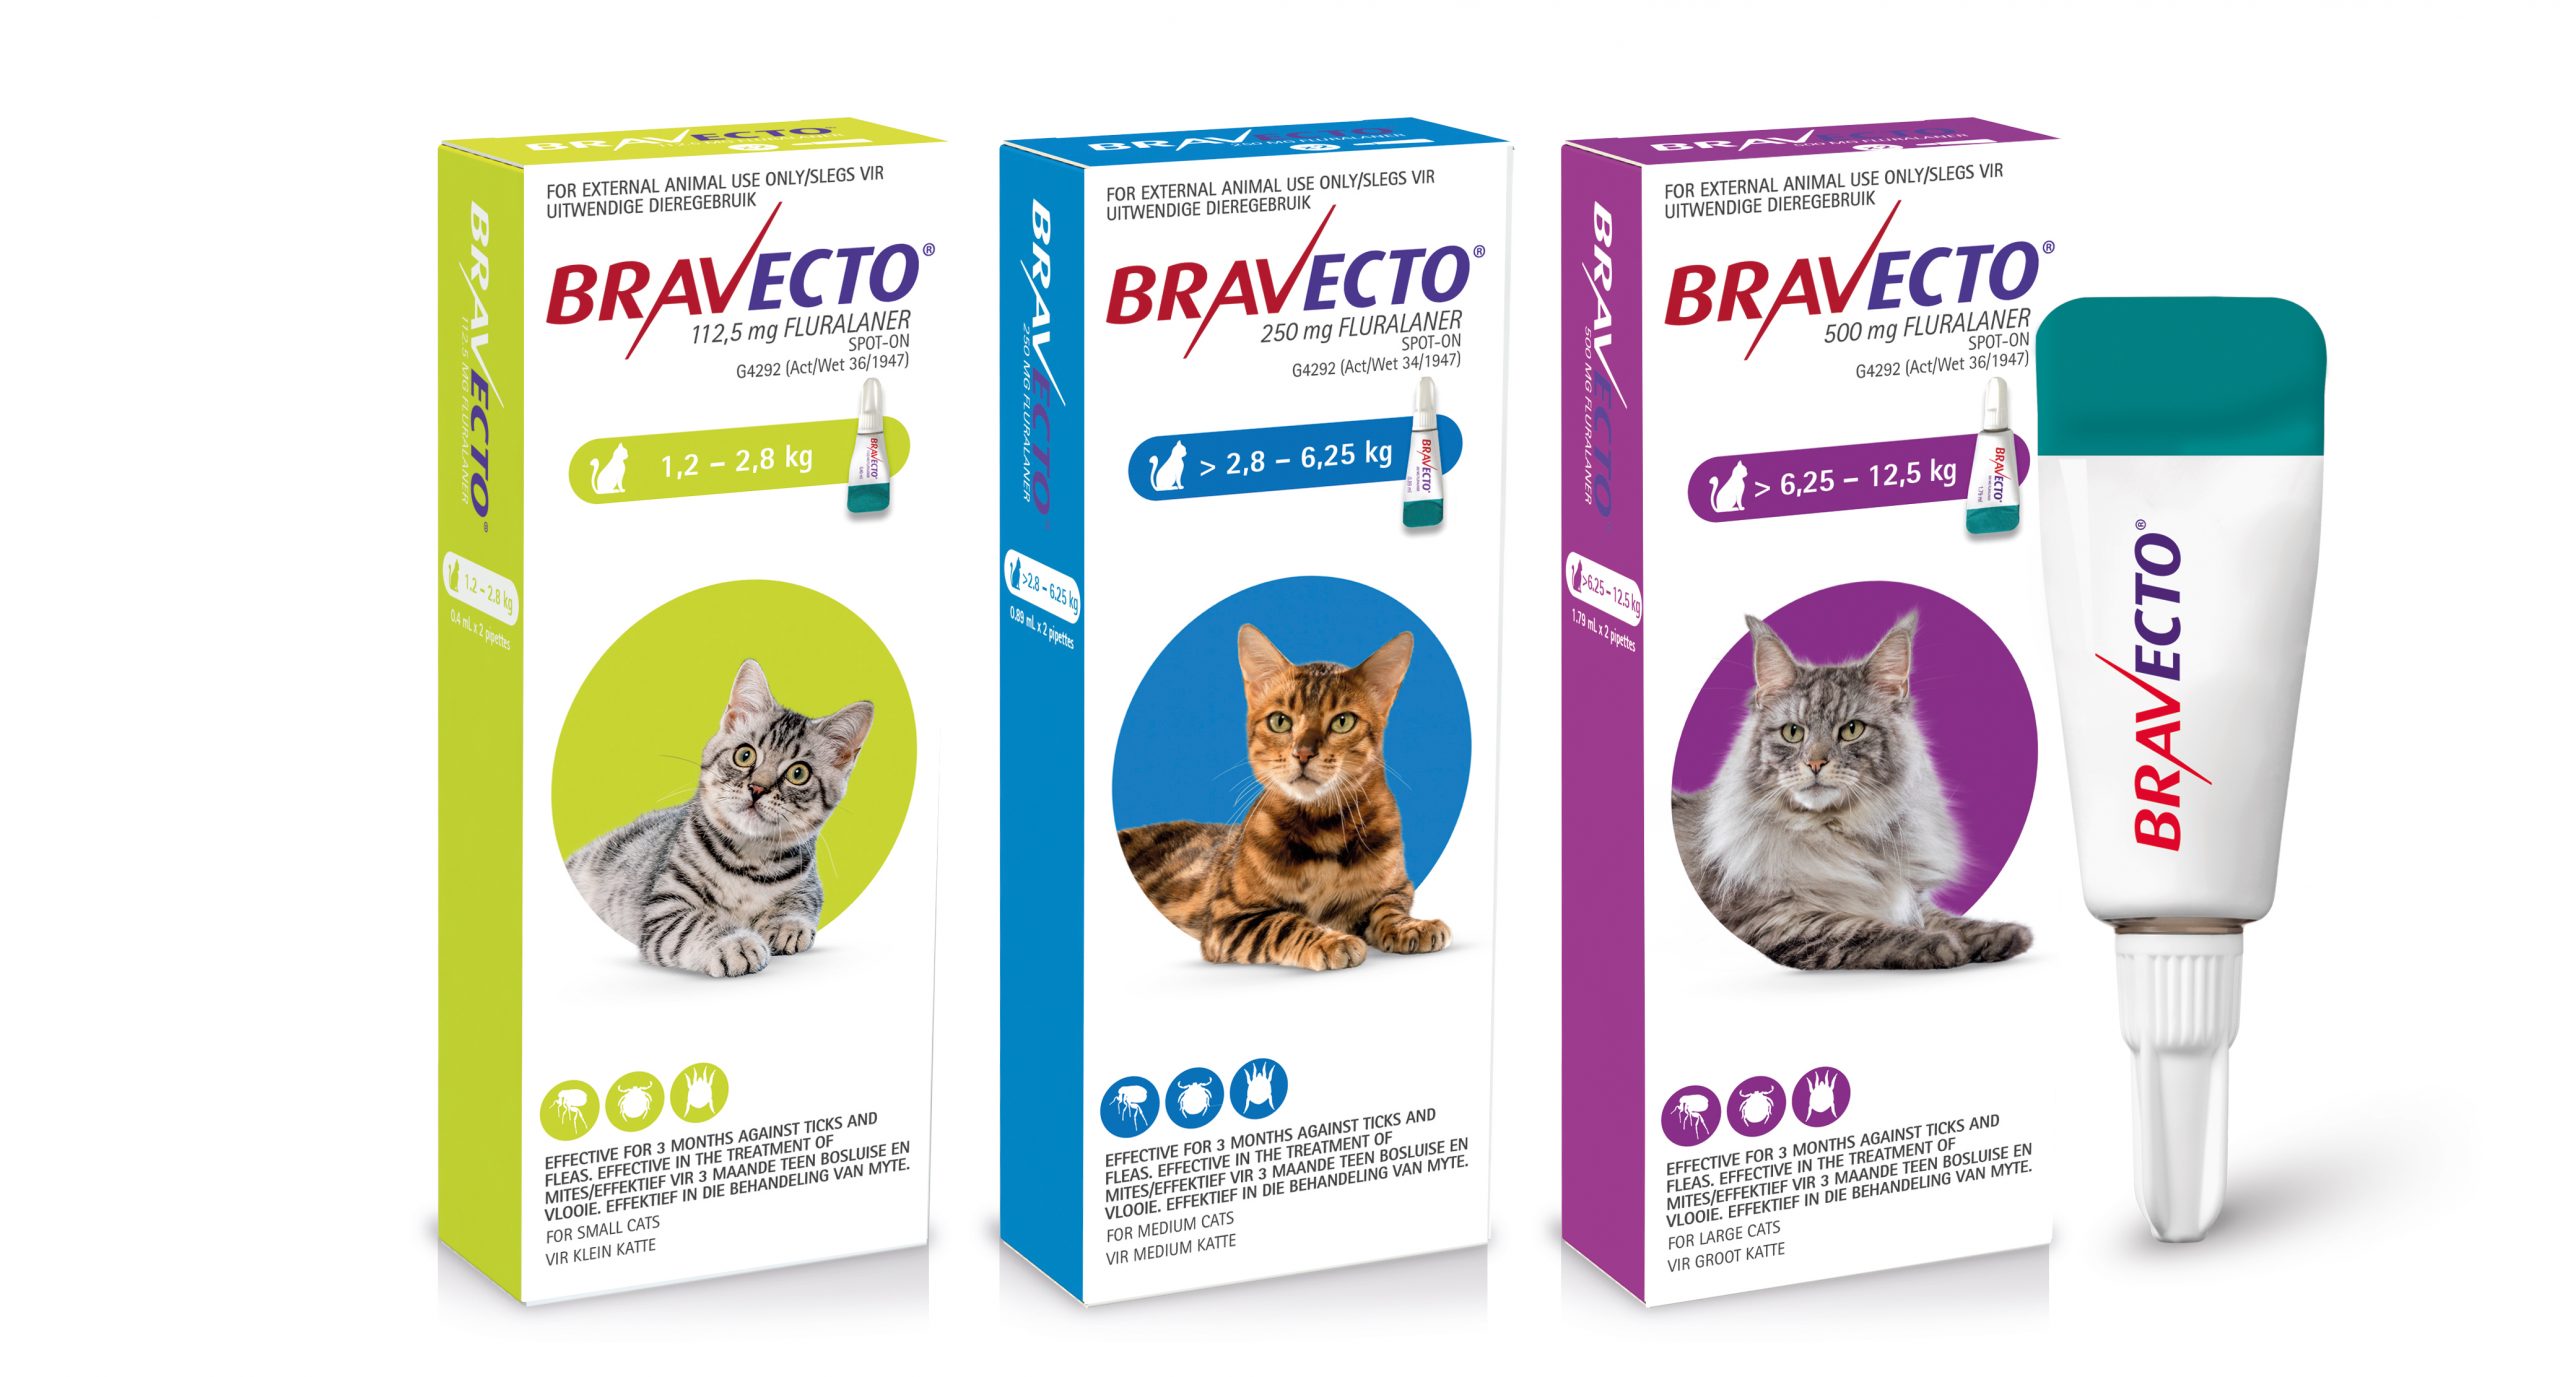 Bravecto Spoton for Dogs & Cats